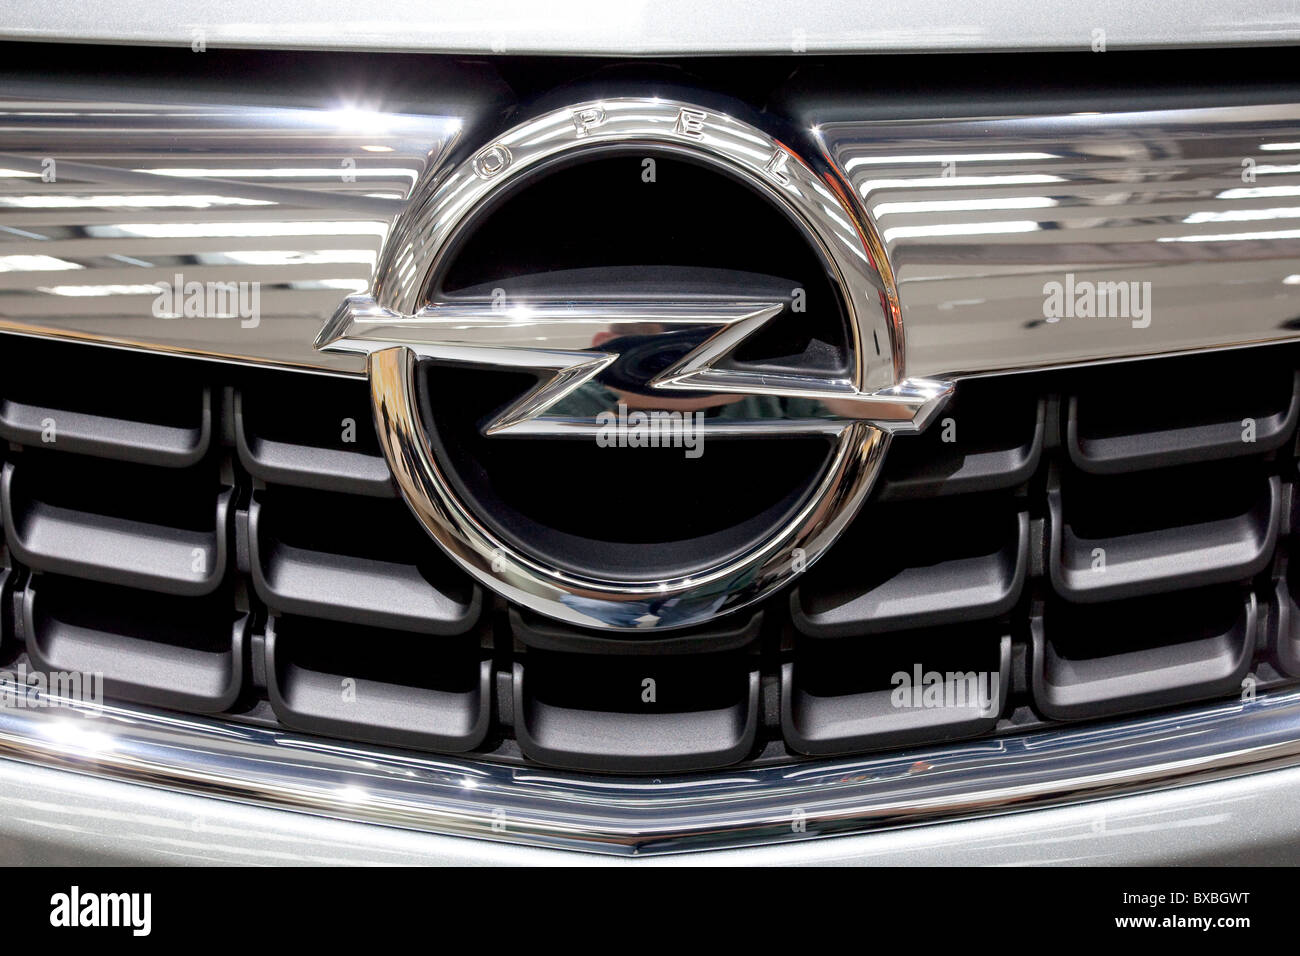 Logo of the Opel car brand Stock Photo - Alamy